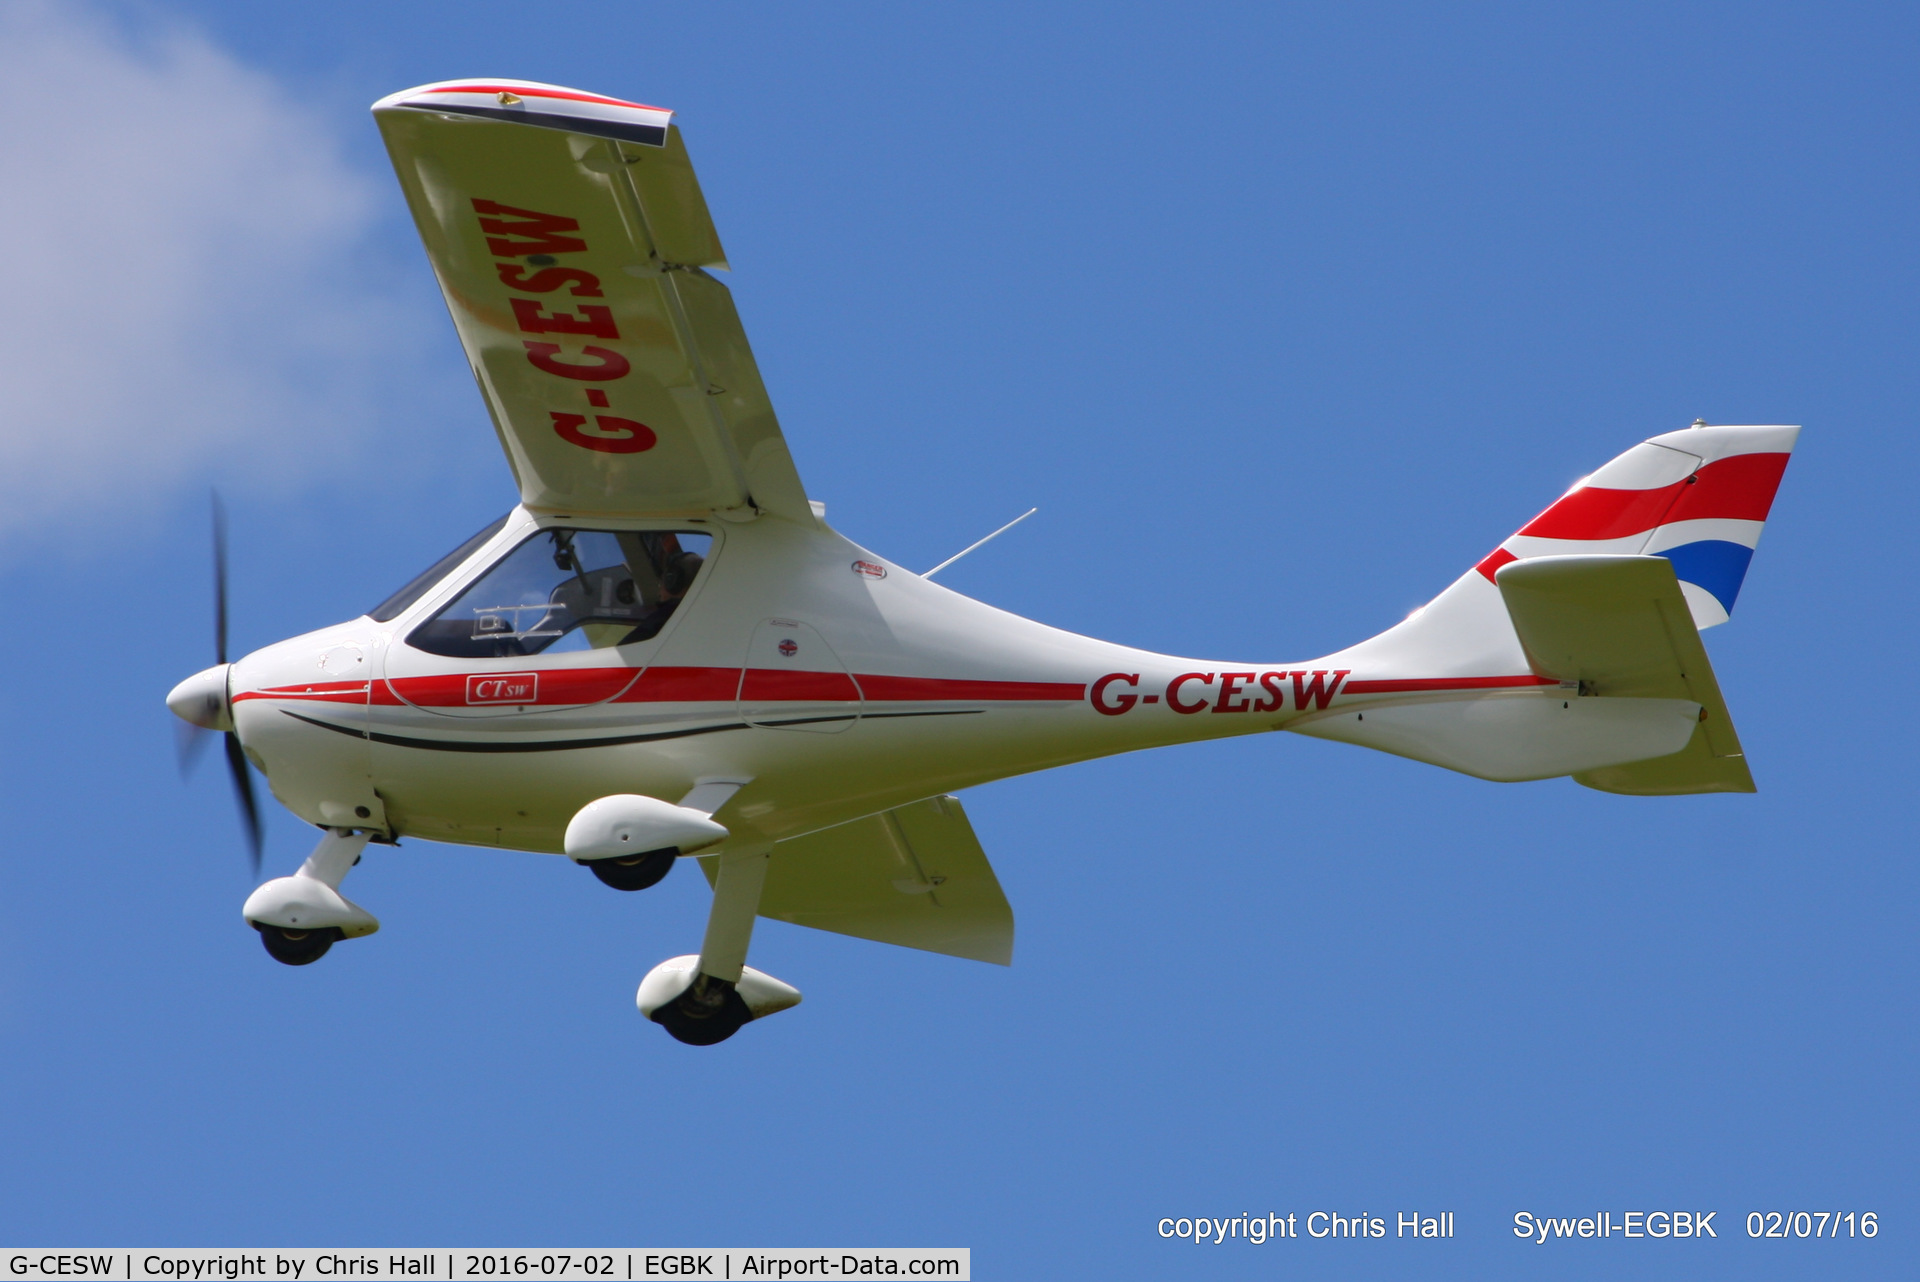 G-CESW, 2007 Flight Design CTSW C/N 8296, at Aeroexpo 2016